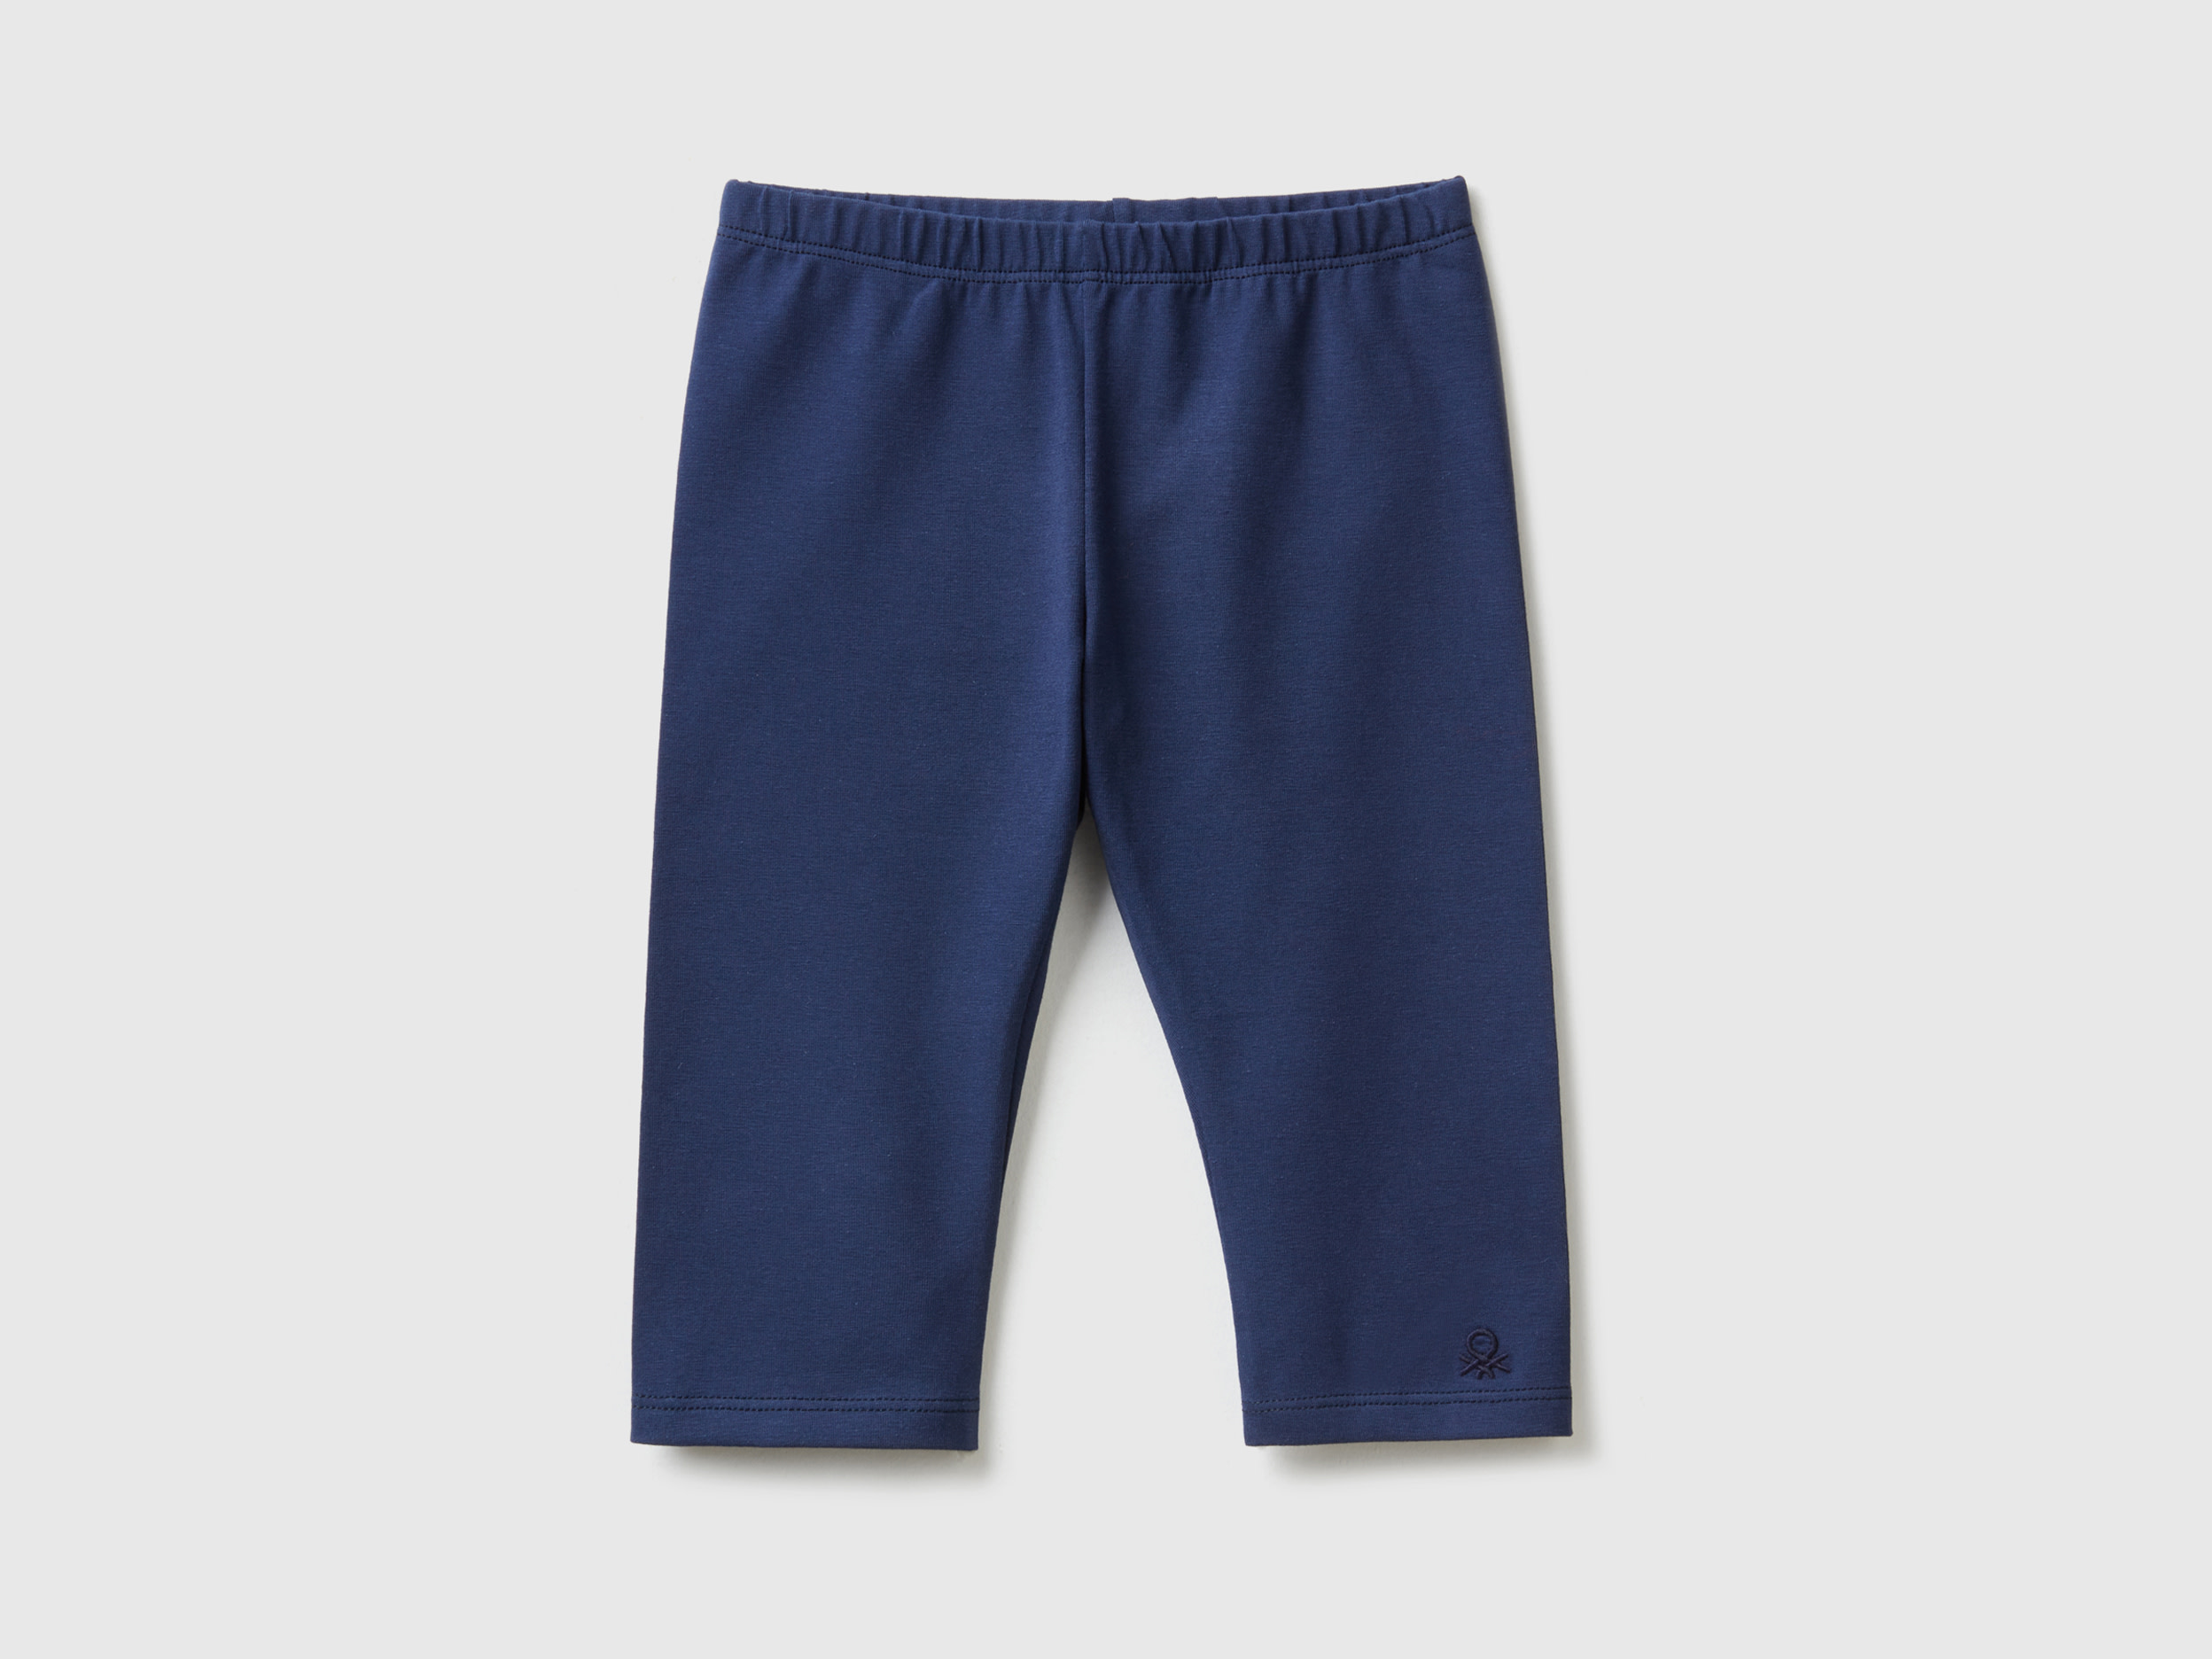 Benetton, 3/4 Leggings In Stretch Cotton, size 12-18, Dark Blue, Kids